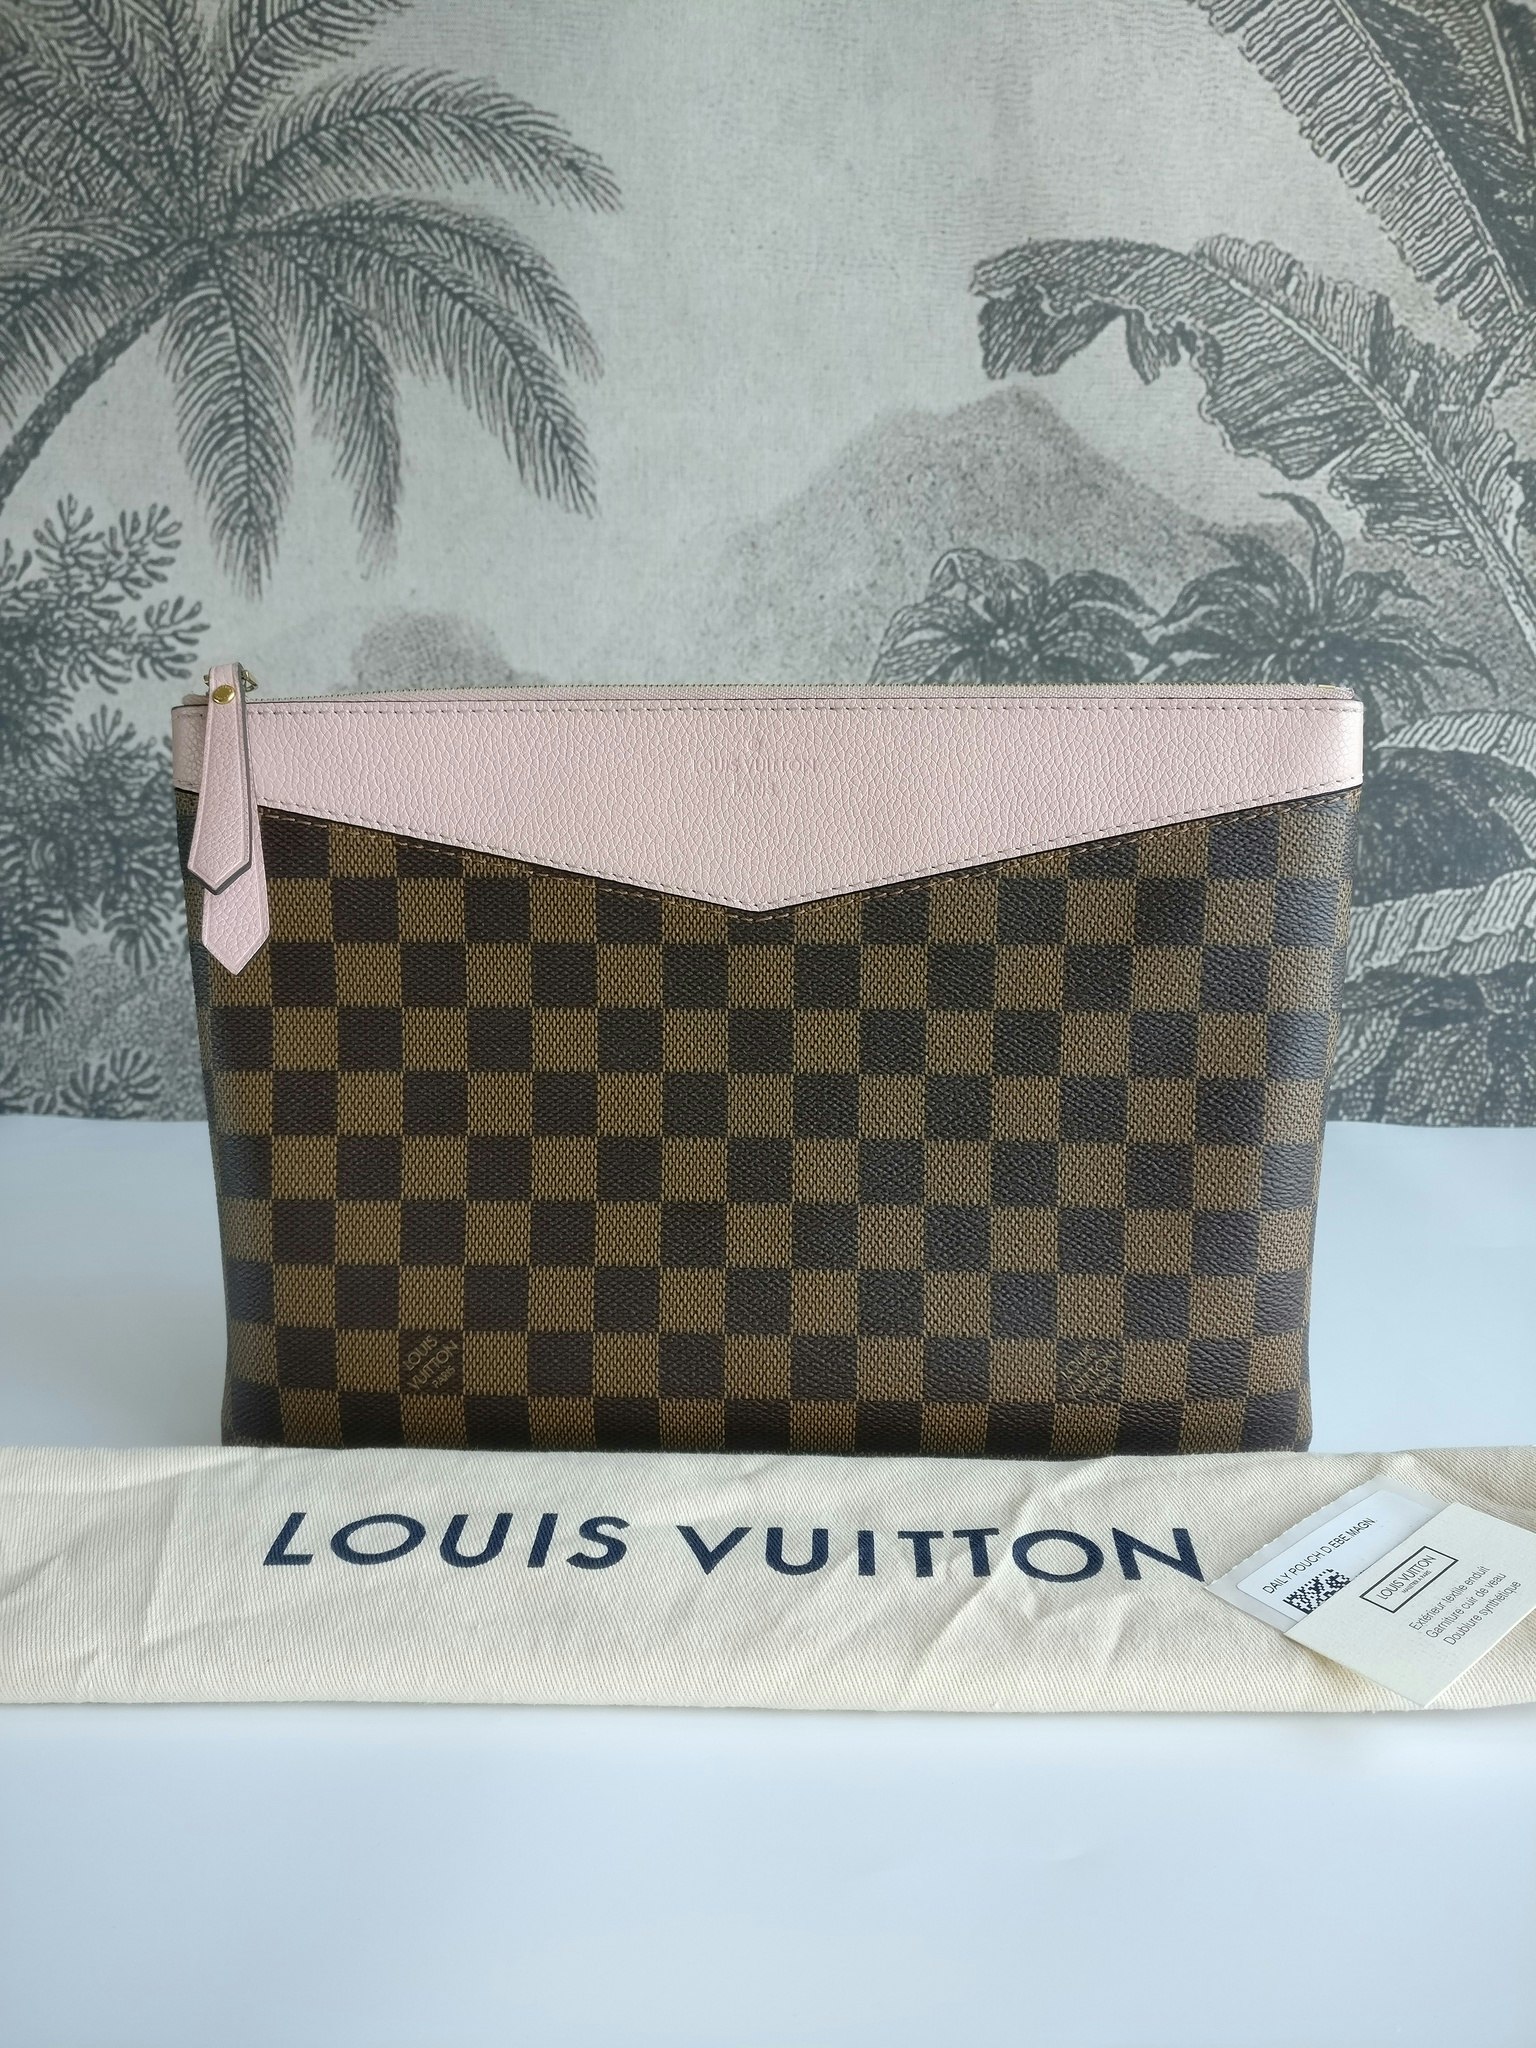 Louis Vuitton Daily Pouch damier ebene - Good or Bag